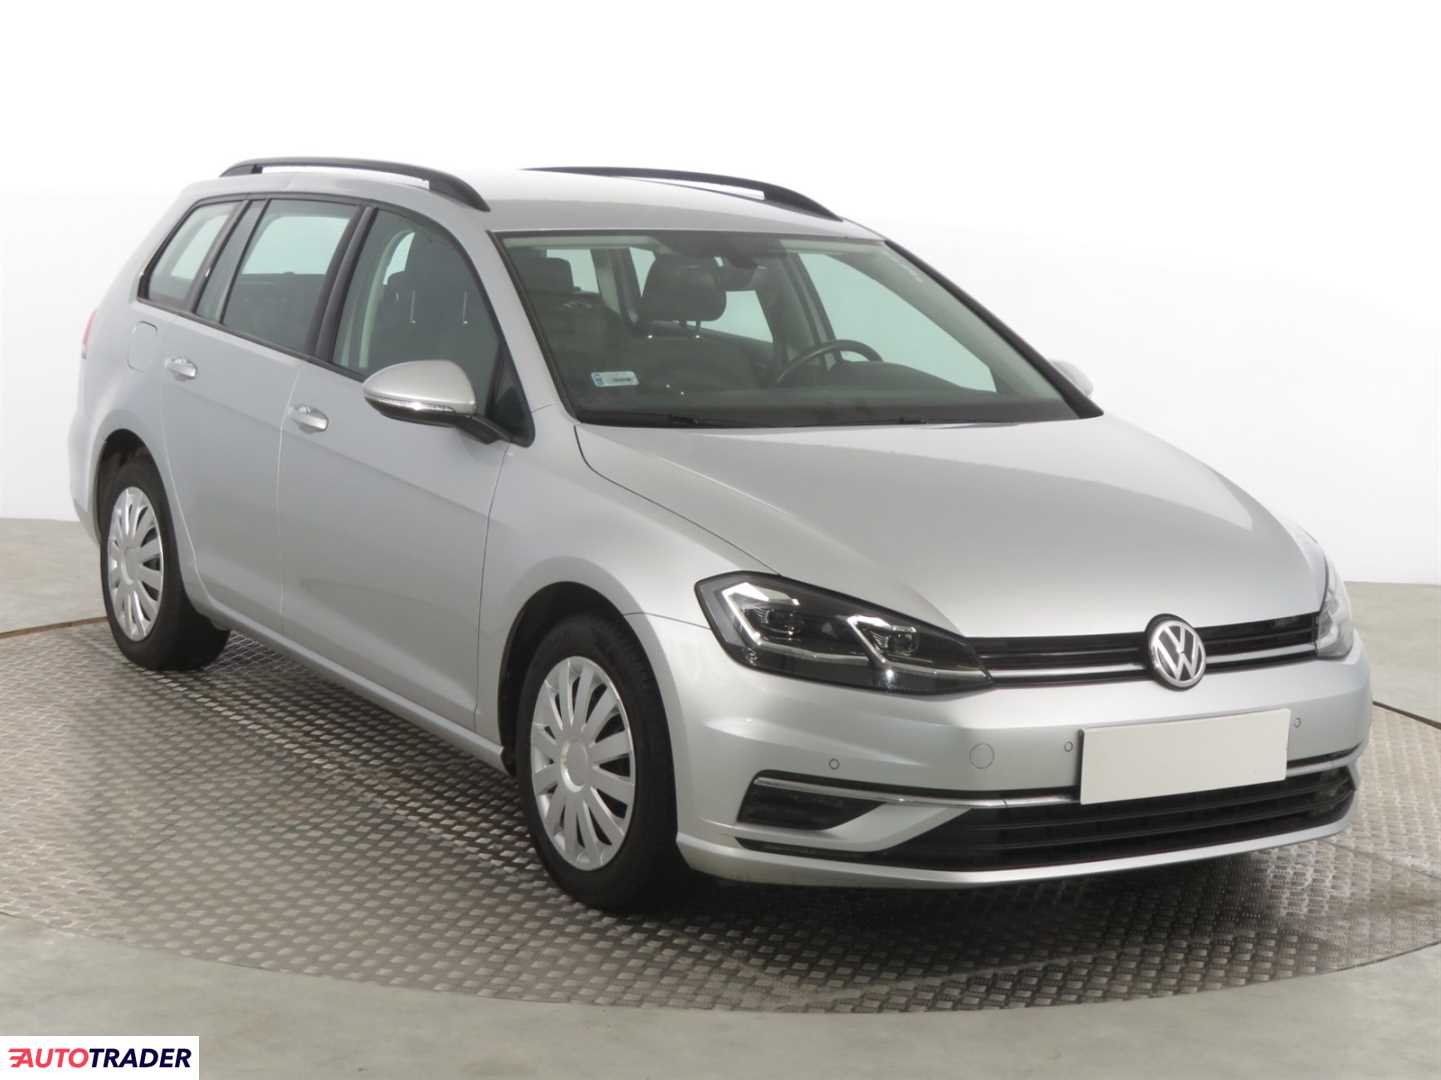 Volkswagen Golf 2018 1.6 113 KM